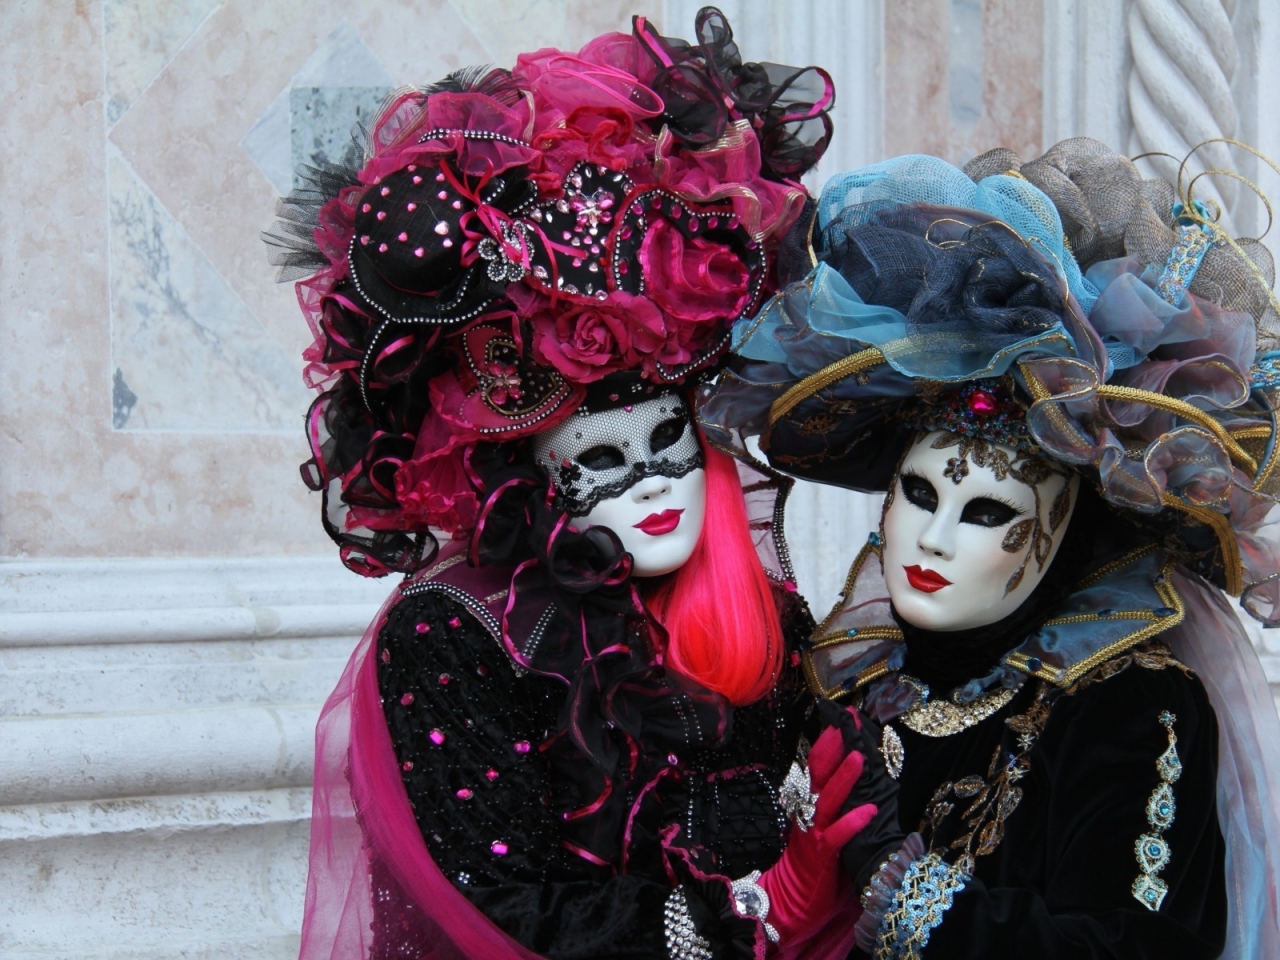 Venice Carnival for 1280 x 960 resolution